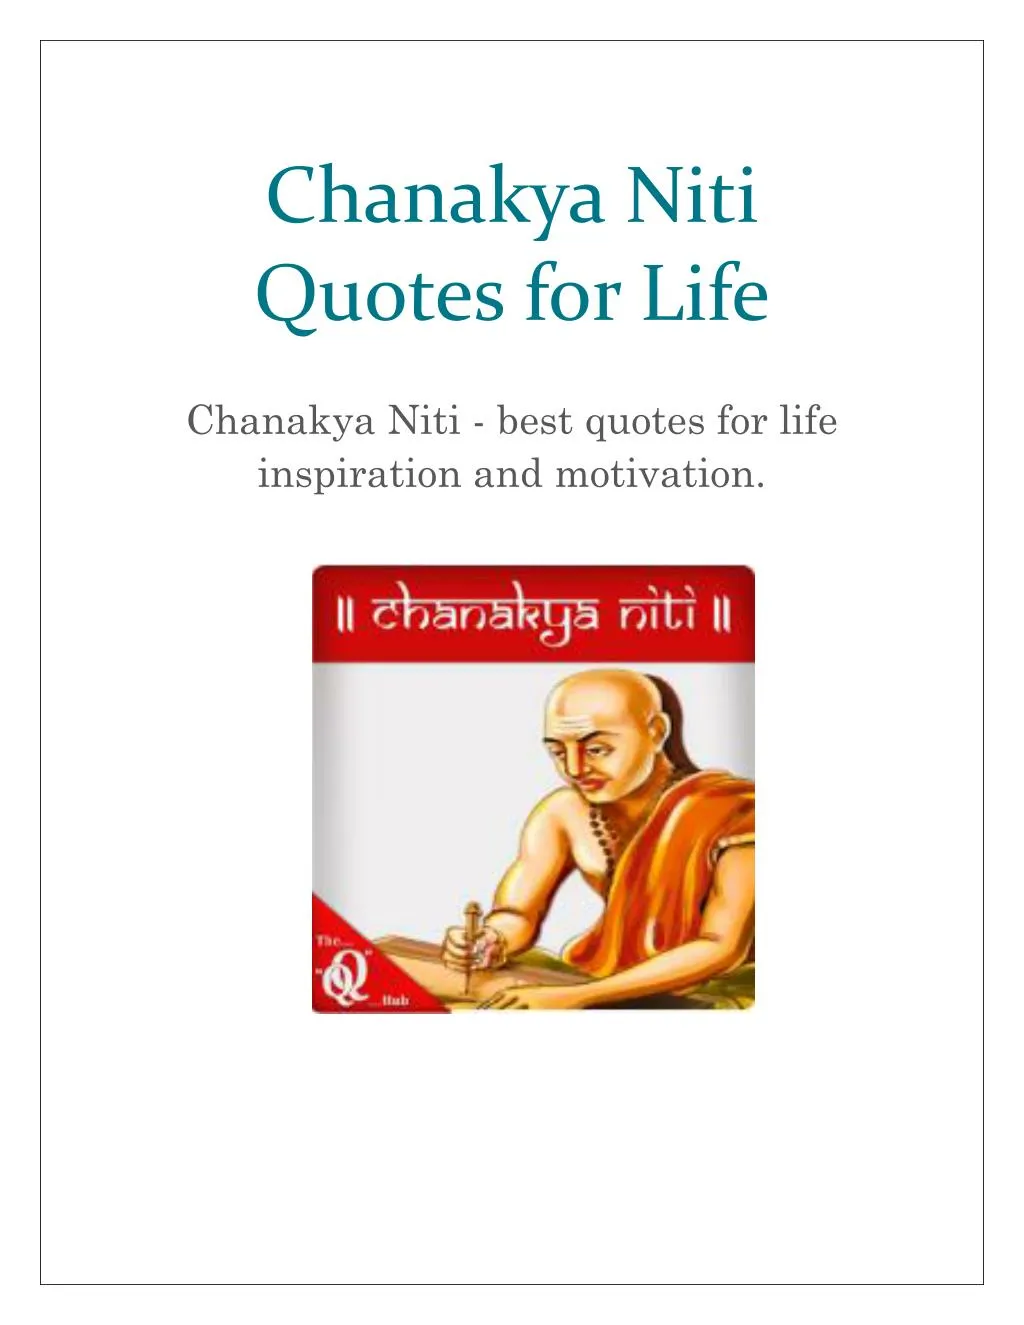 chanakya niti quotes for life chanakya niti best